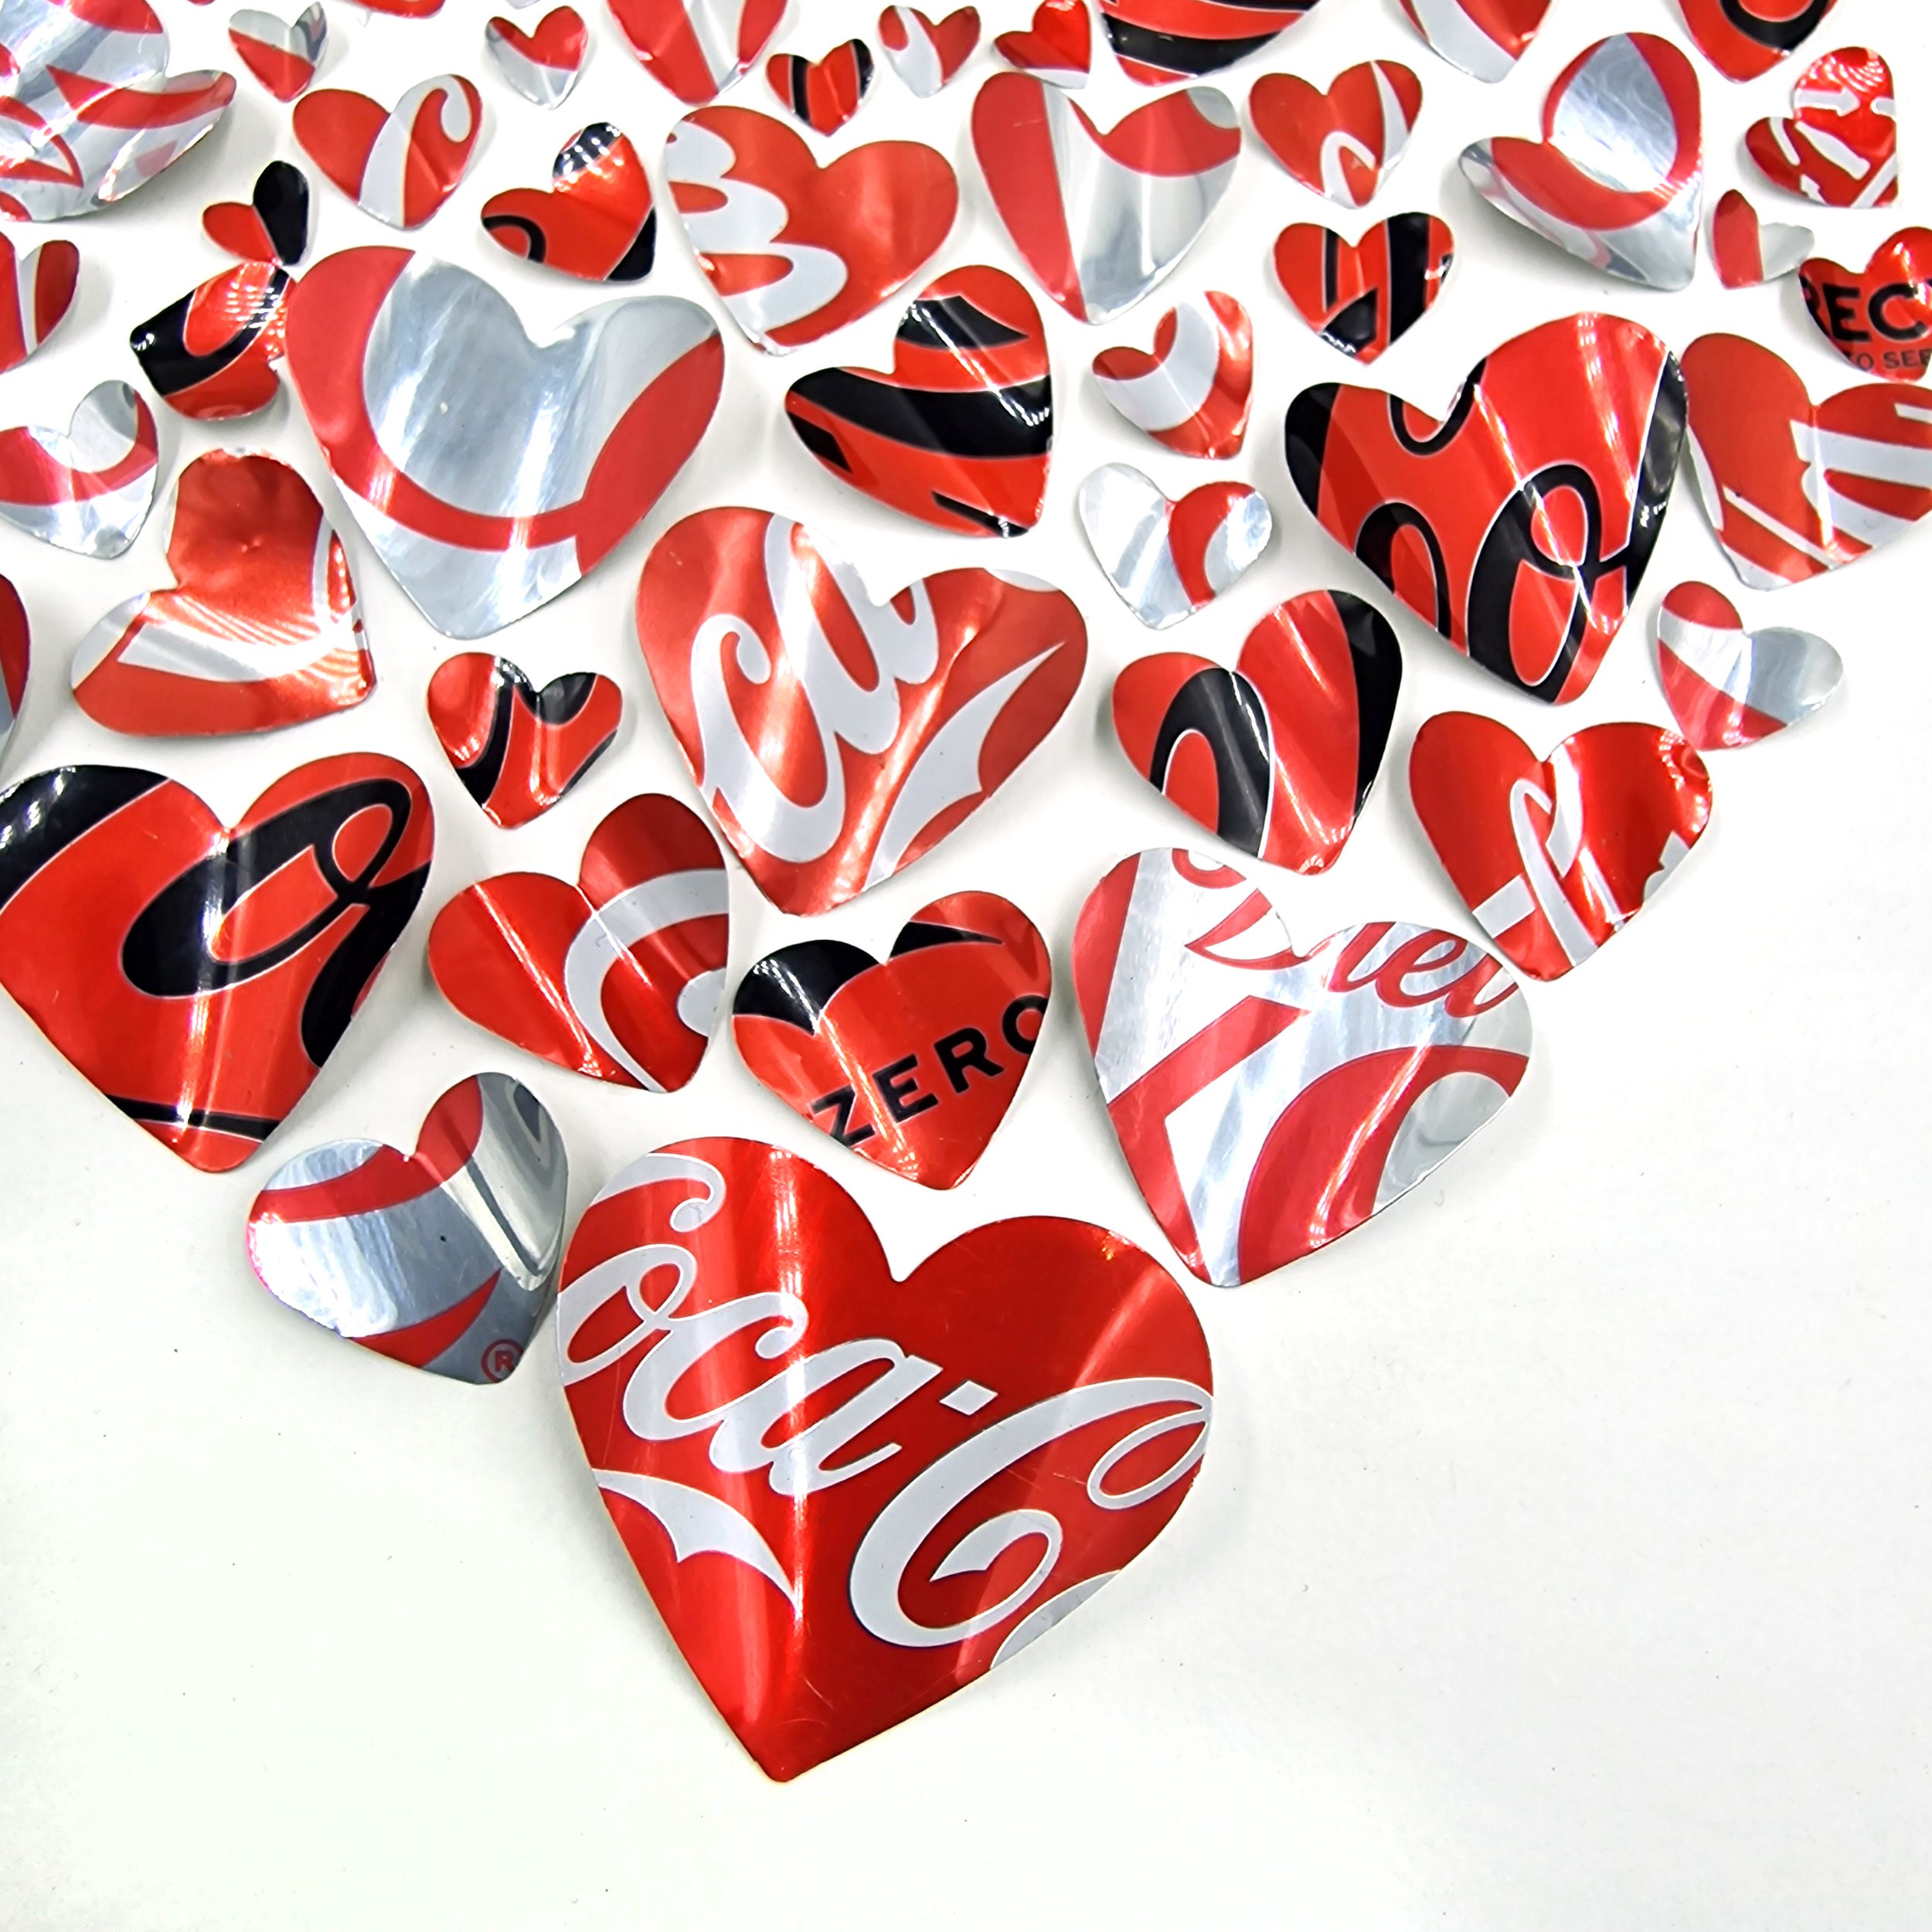 Coke Mix Hearts Close Up2.jpg